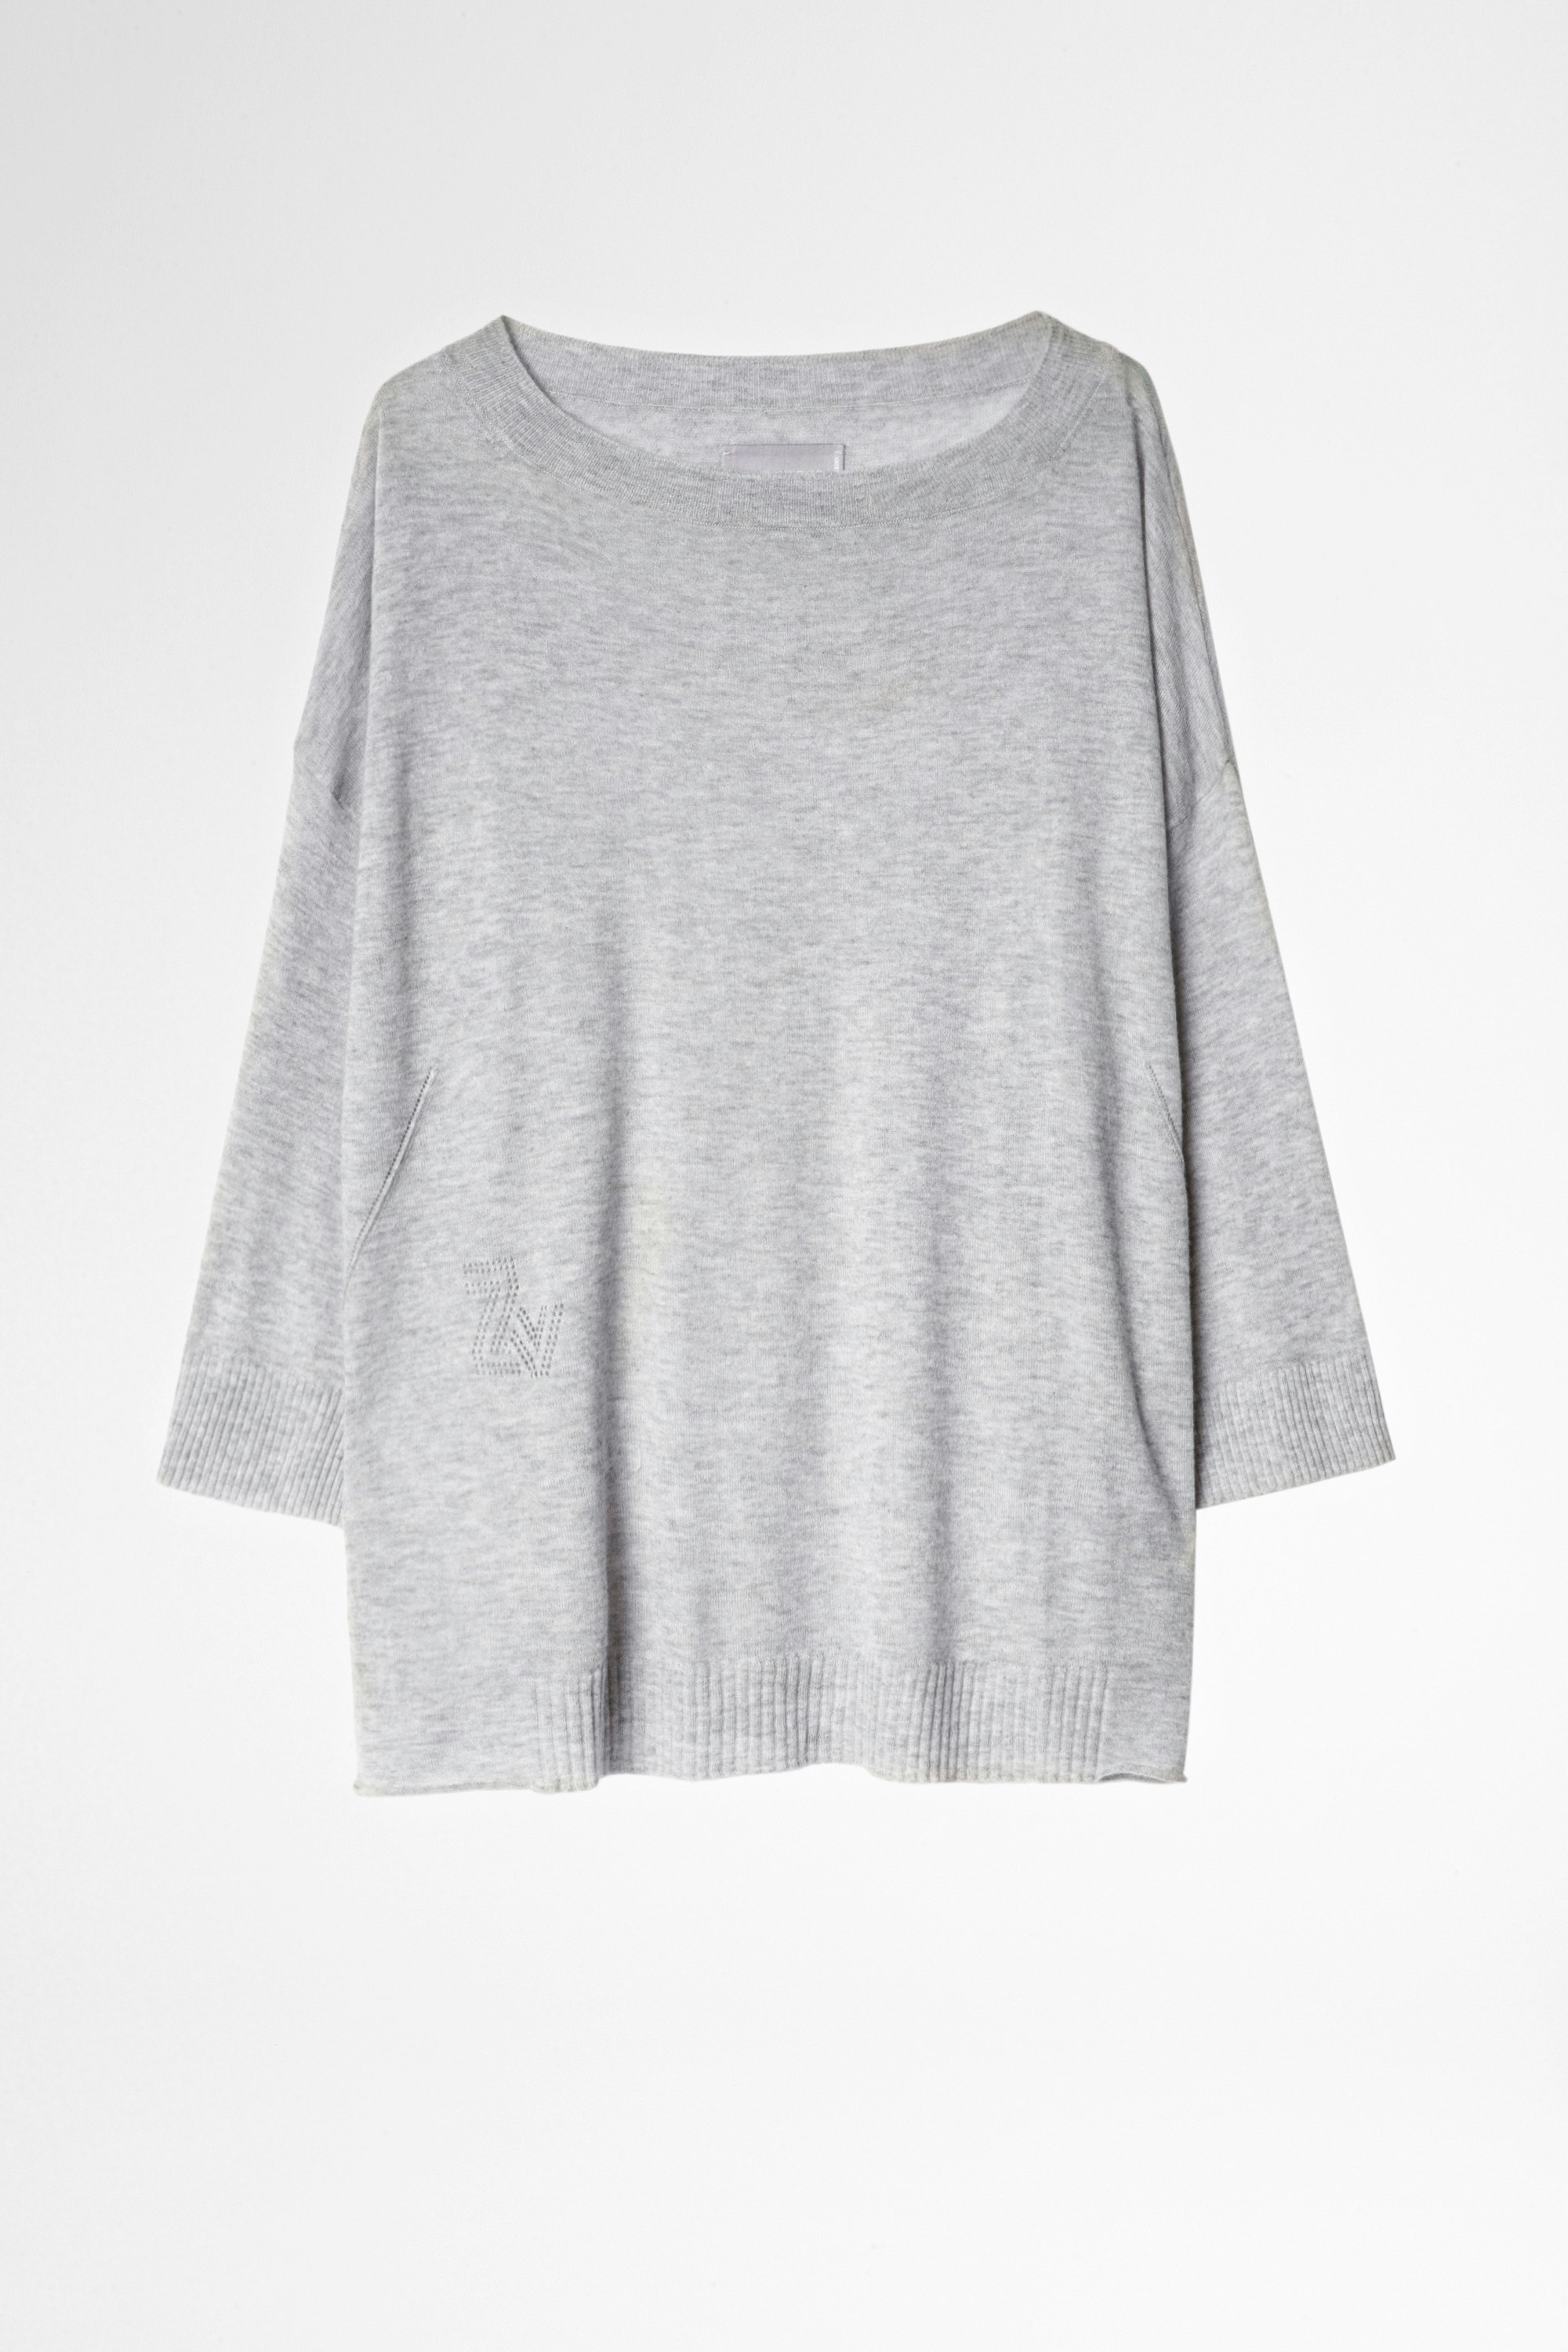 Cashmere Flint Sweater Woman’s light flecked grey three-quarter sleeve sweater